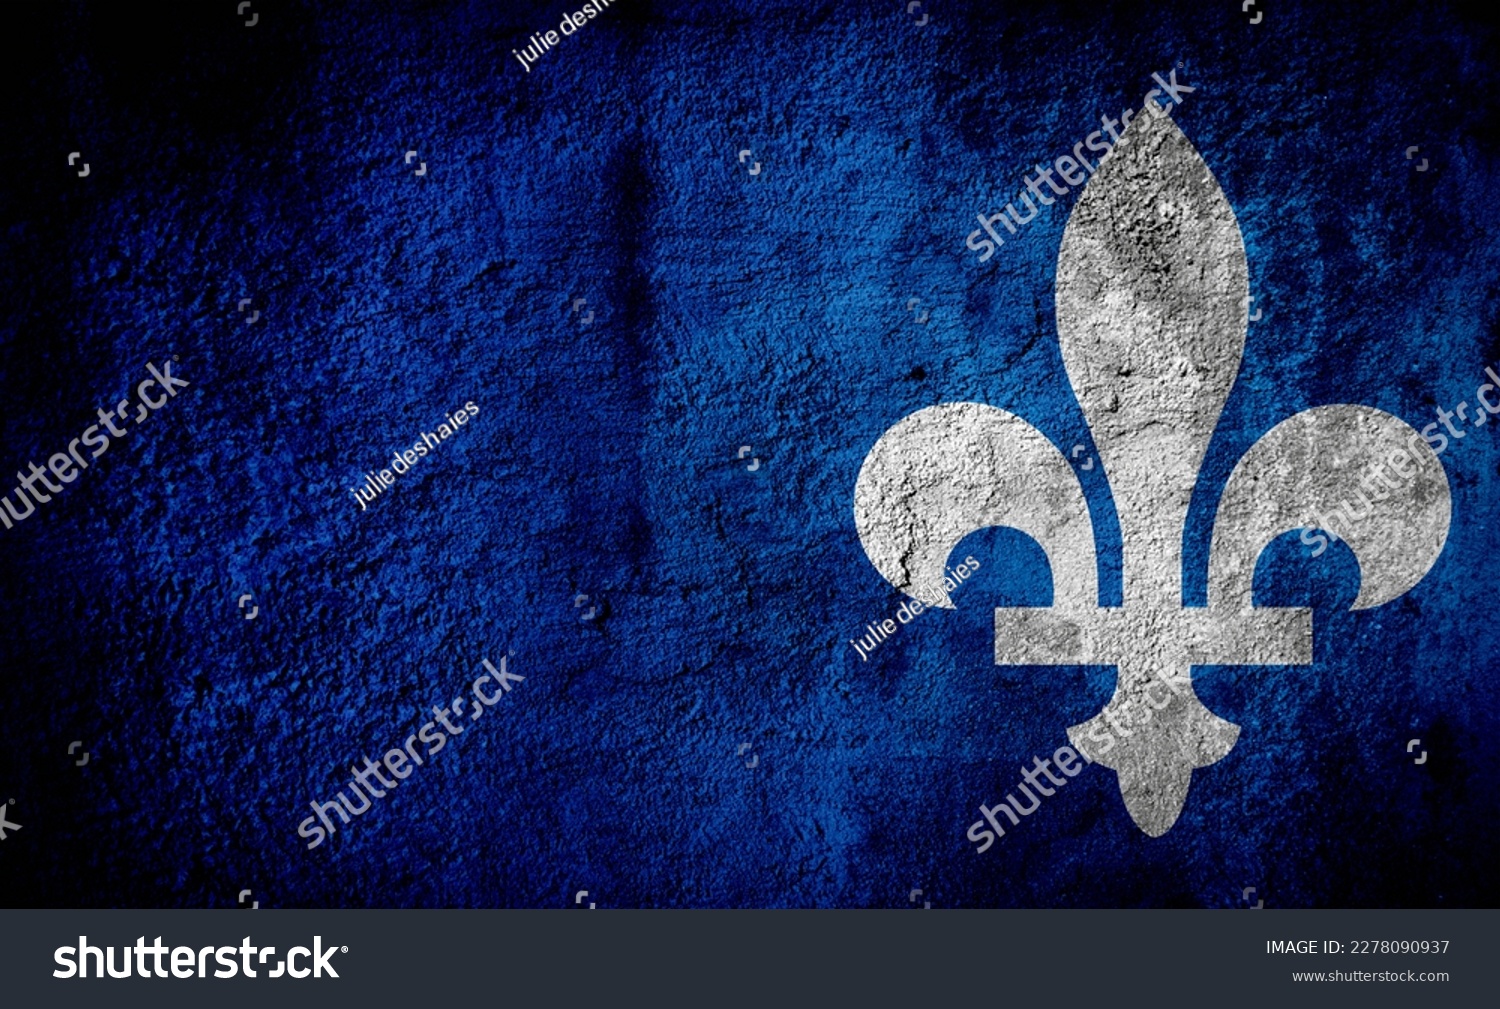 Quebec Province Fleur de Lys emblem abstract background. Quebec is a province of Canada country. Concrete texture background #2278090937